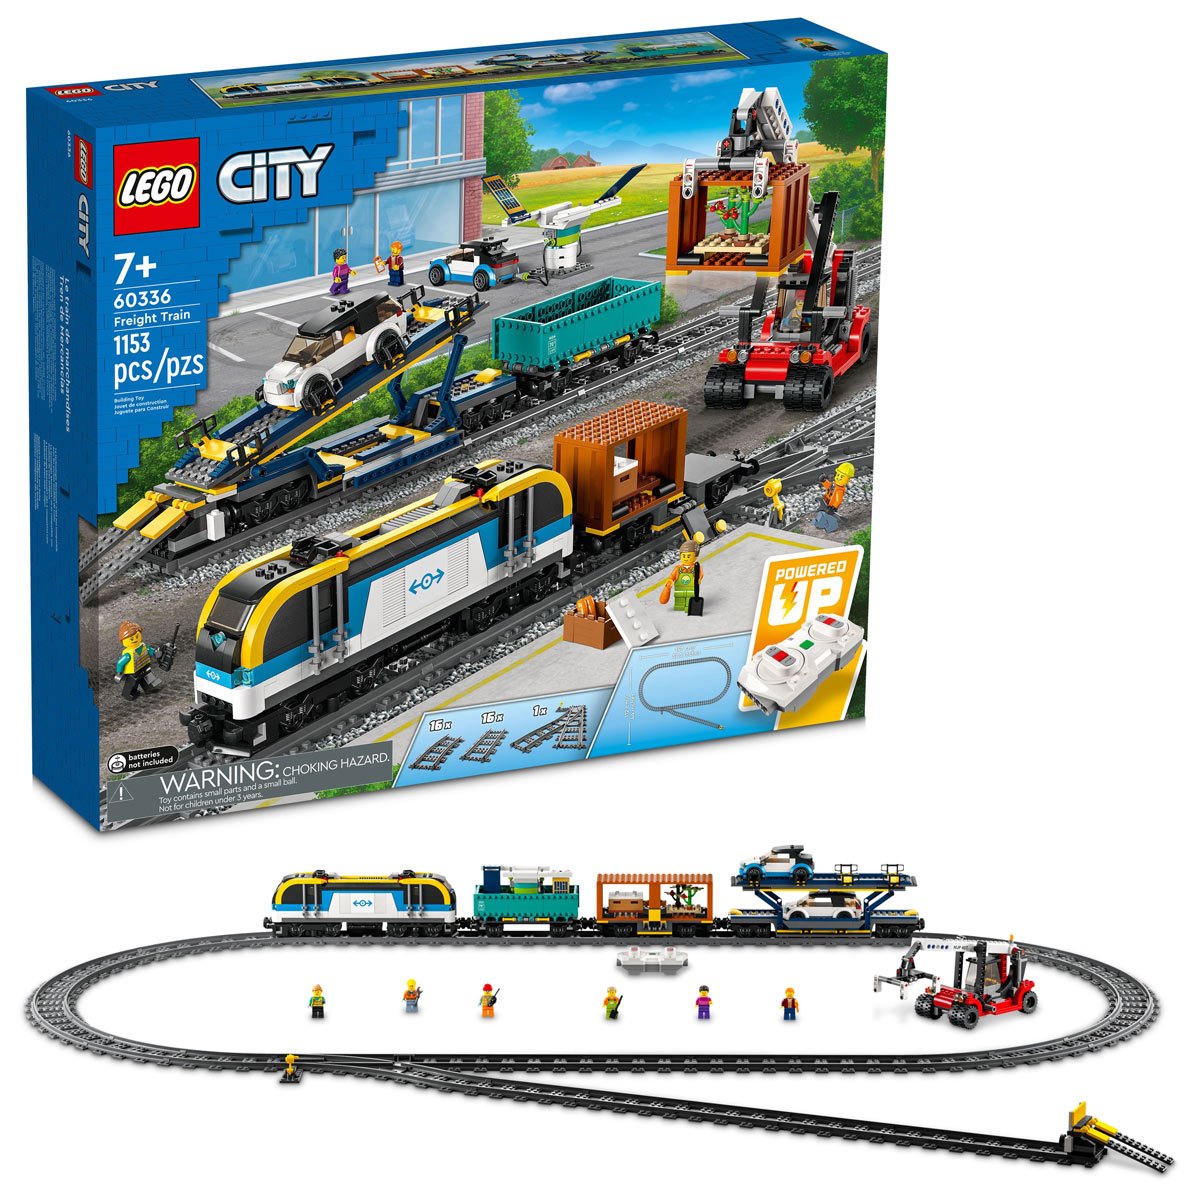 LEGO 60336 City Freight Train Entertainment Earth